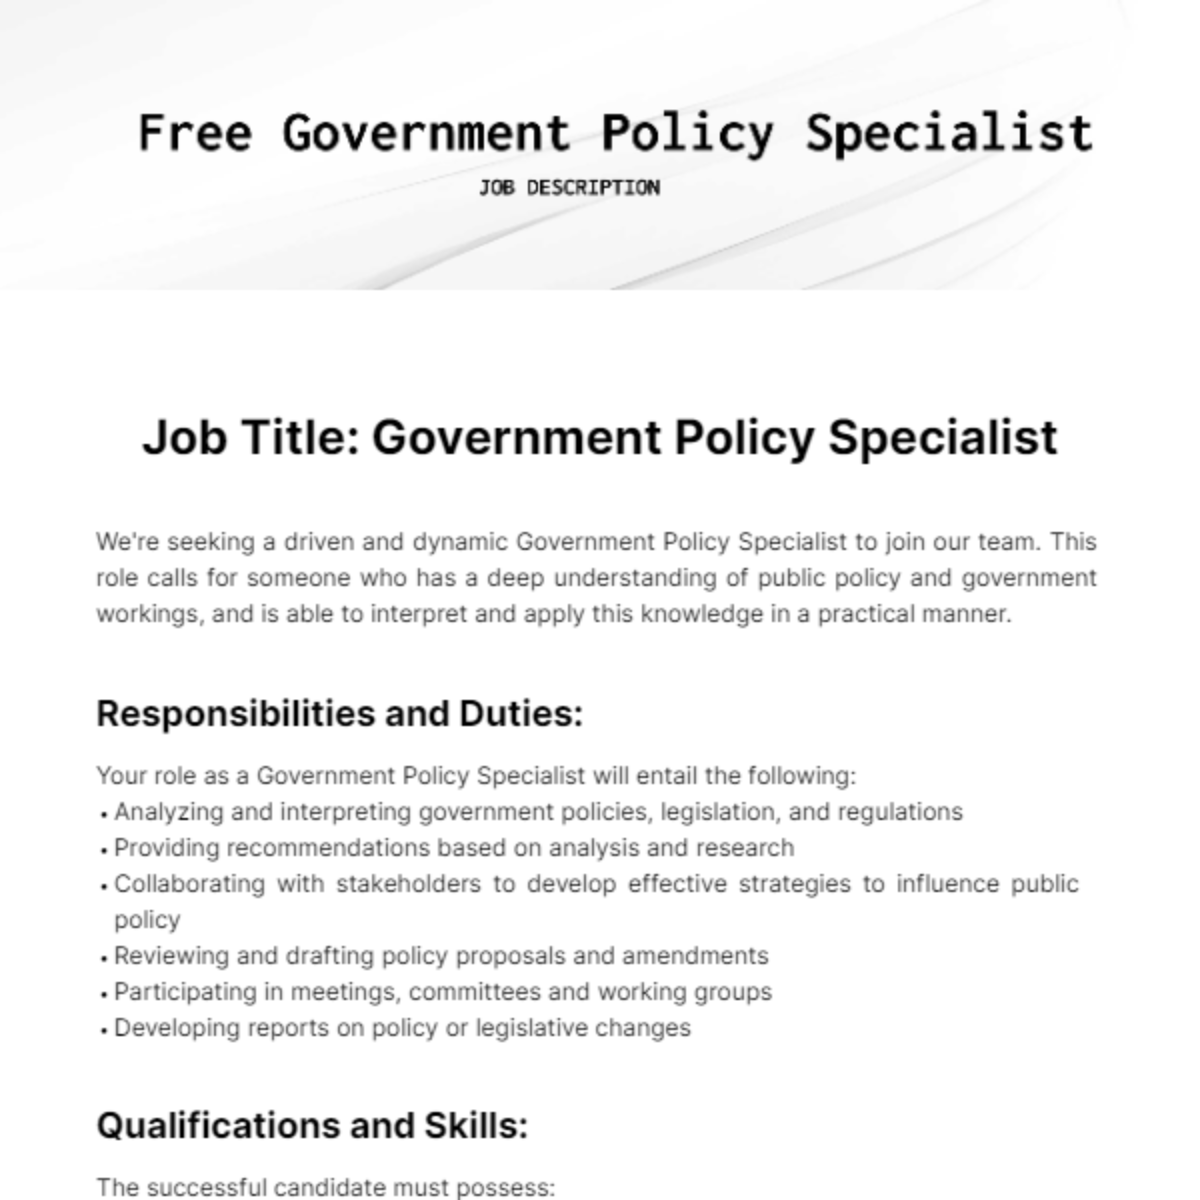 Free Government Policy Specialist Job Description Template